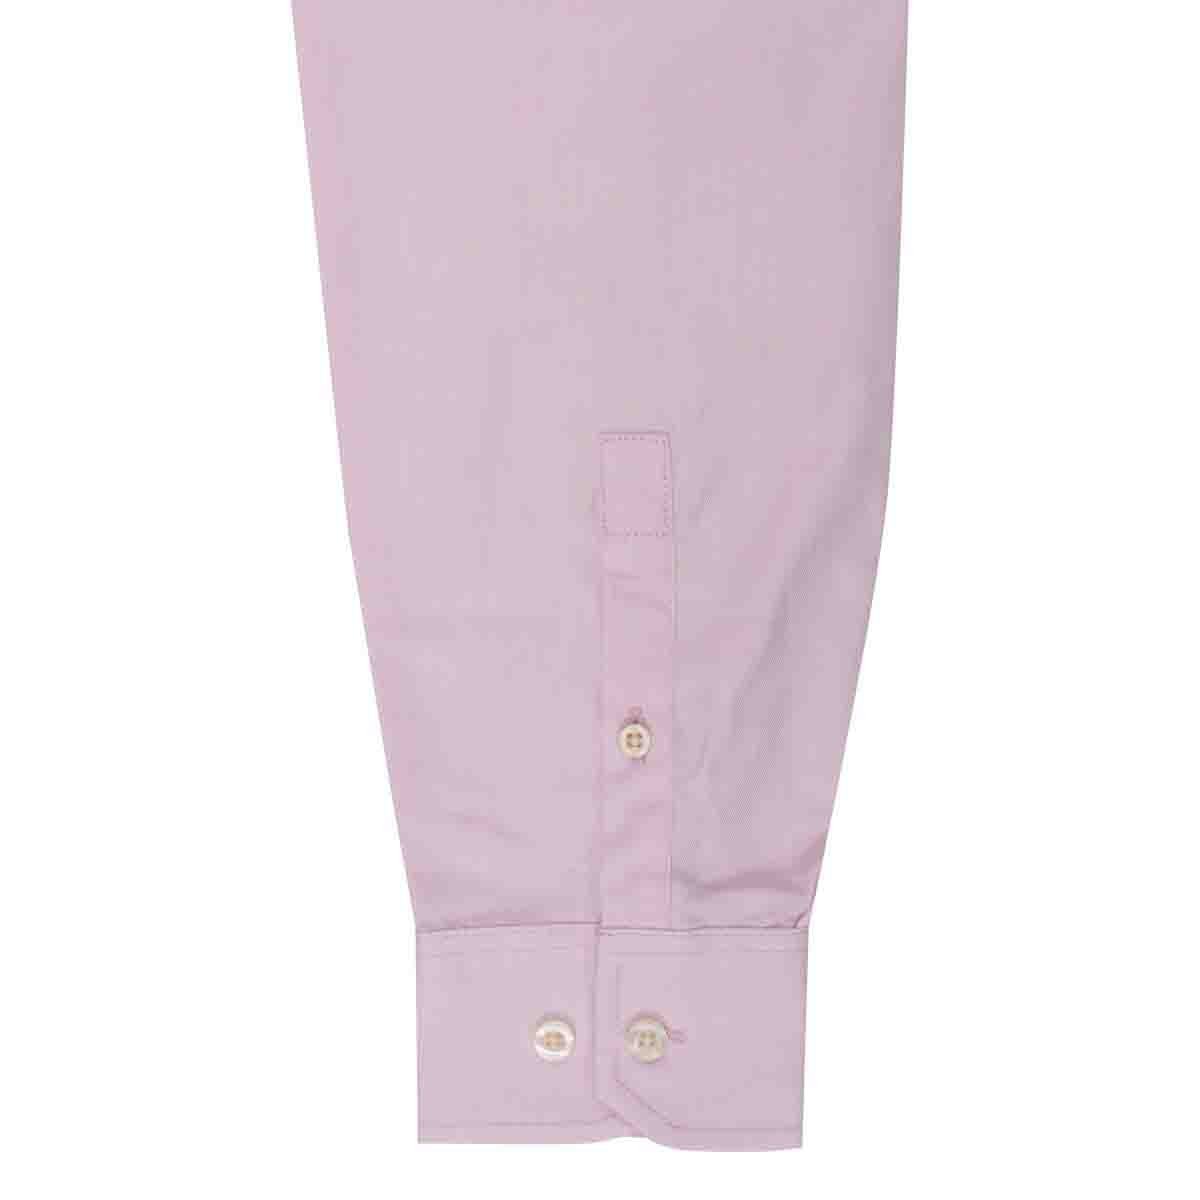 Camisa de Vestir Corte Regular Color Rosa Nautica